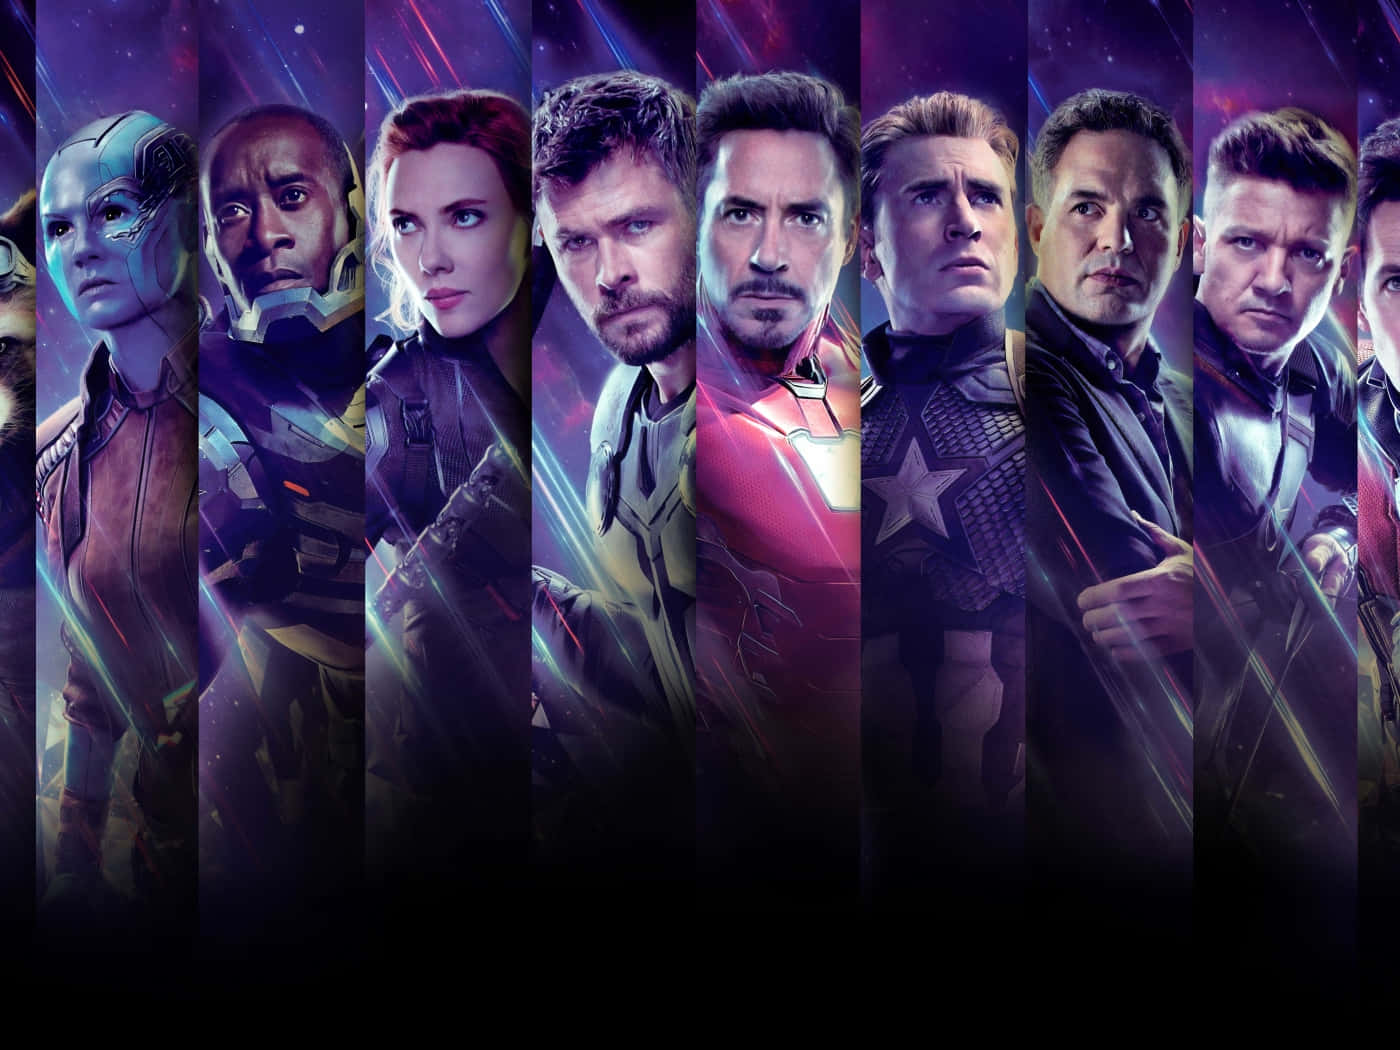 Caption: The Avengers Assemble: Final Battle In Endgame